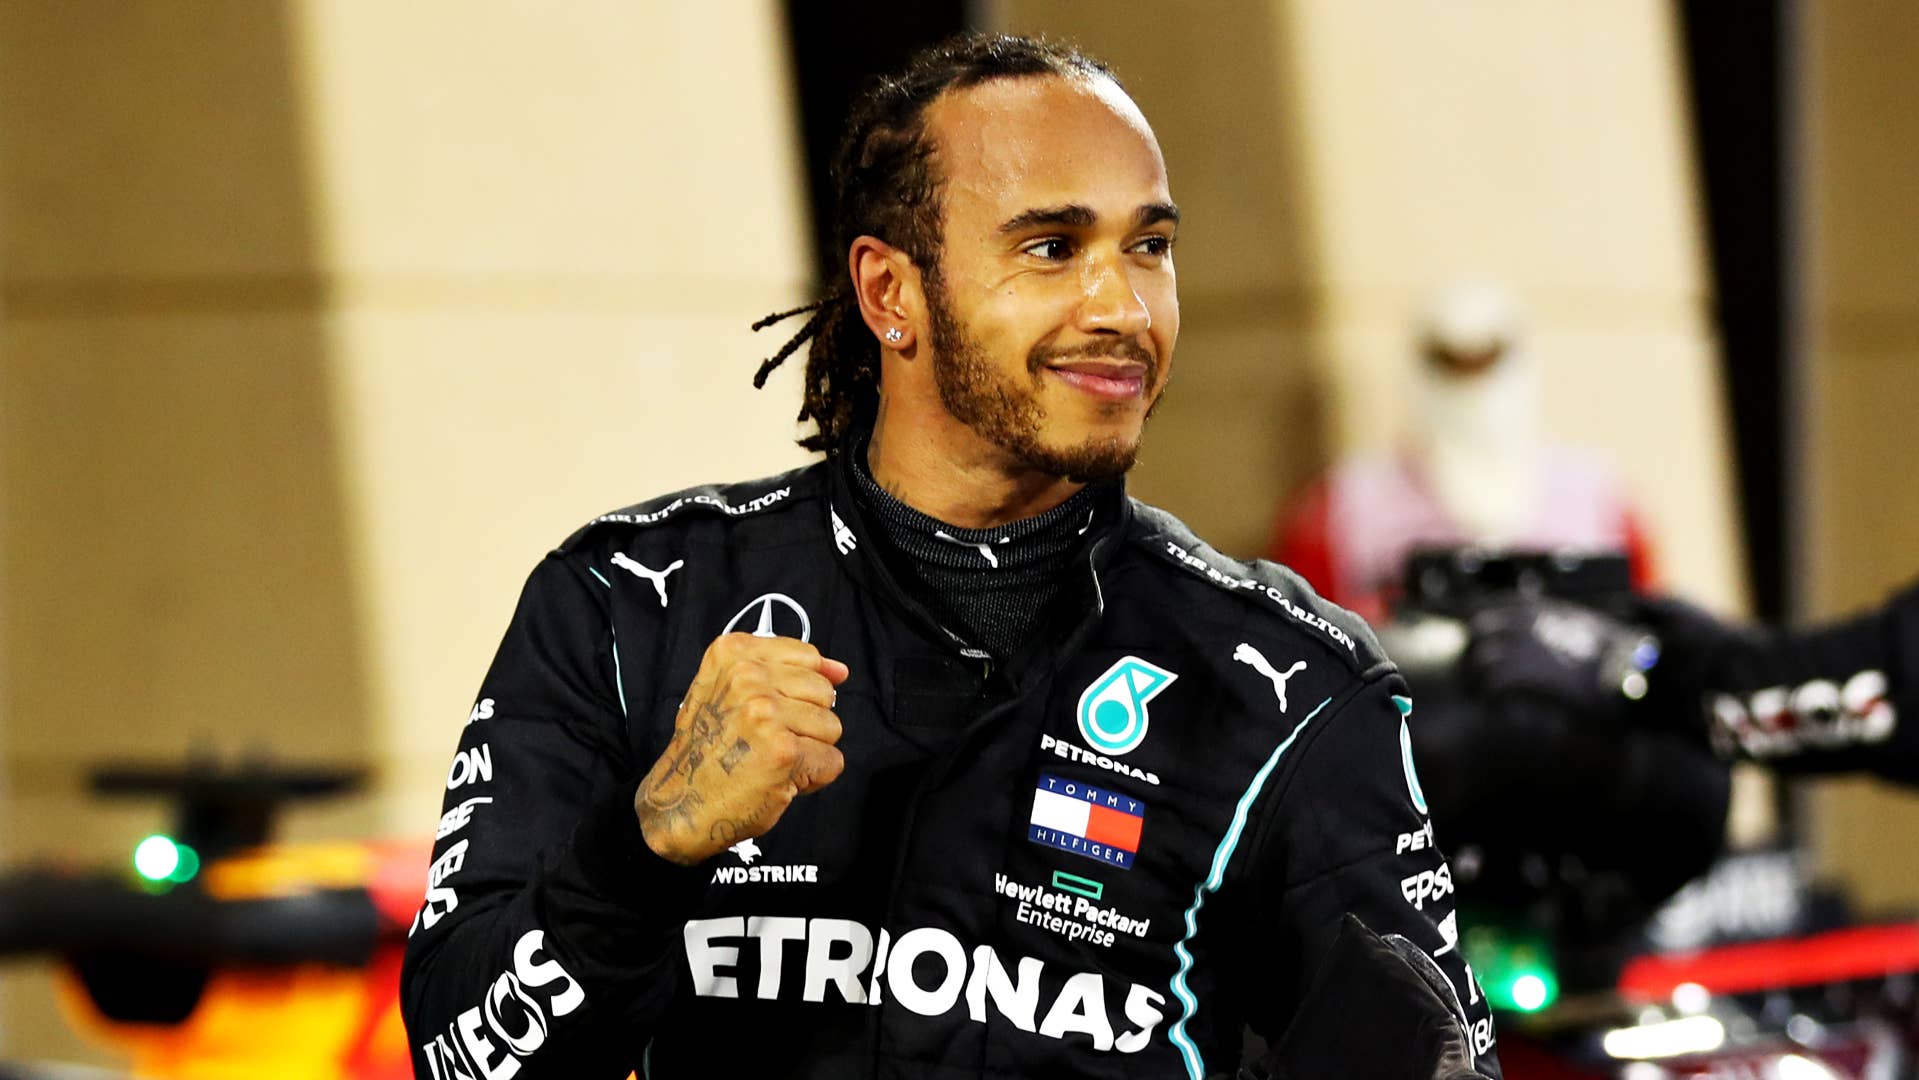 Lewis Hamilton celebrates F1 Grand Prix victory with a fist pump.